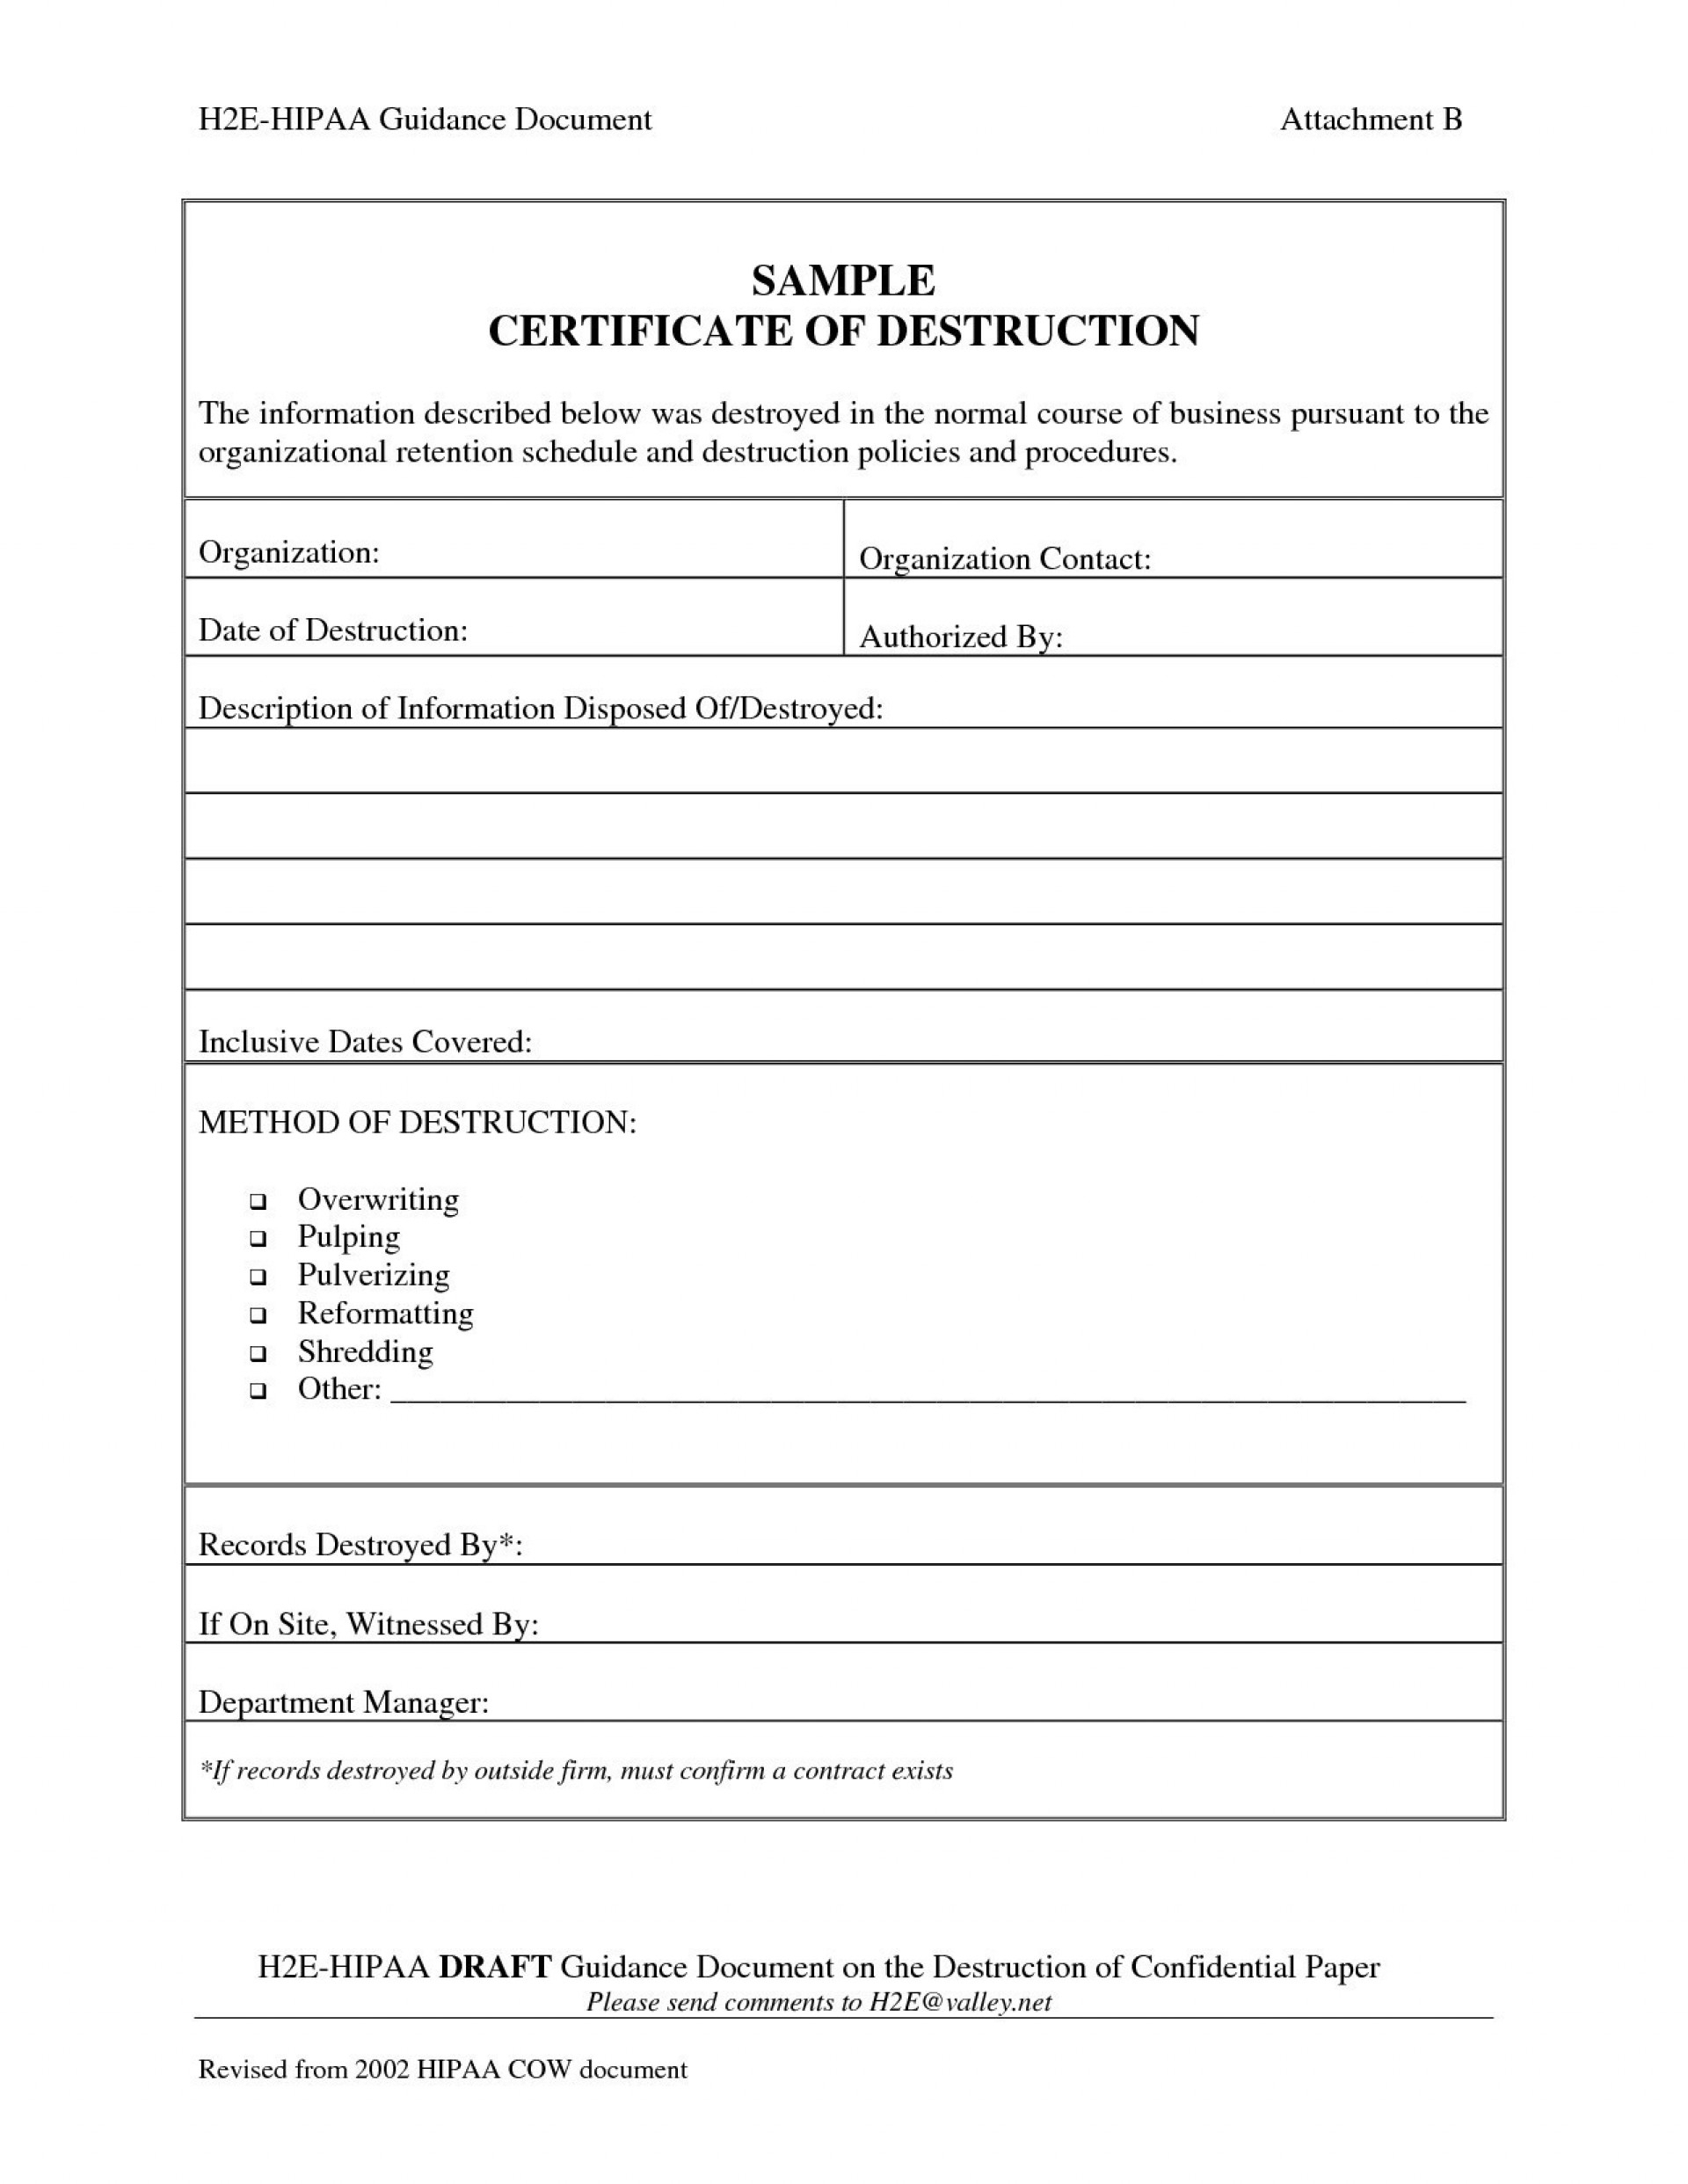 033 Certificate Of Destruction Template Hard Drive Together In Certificate Of Destruction Template